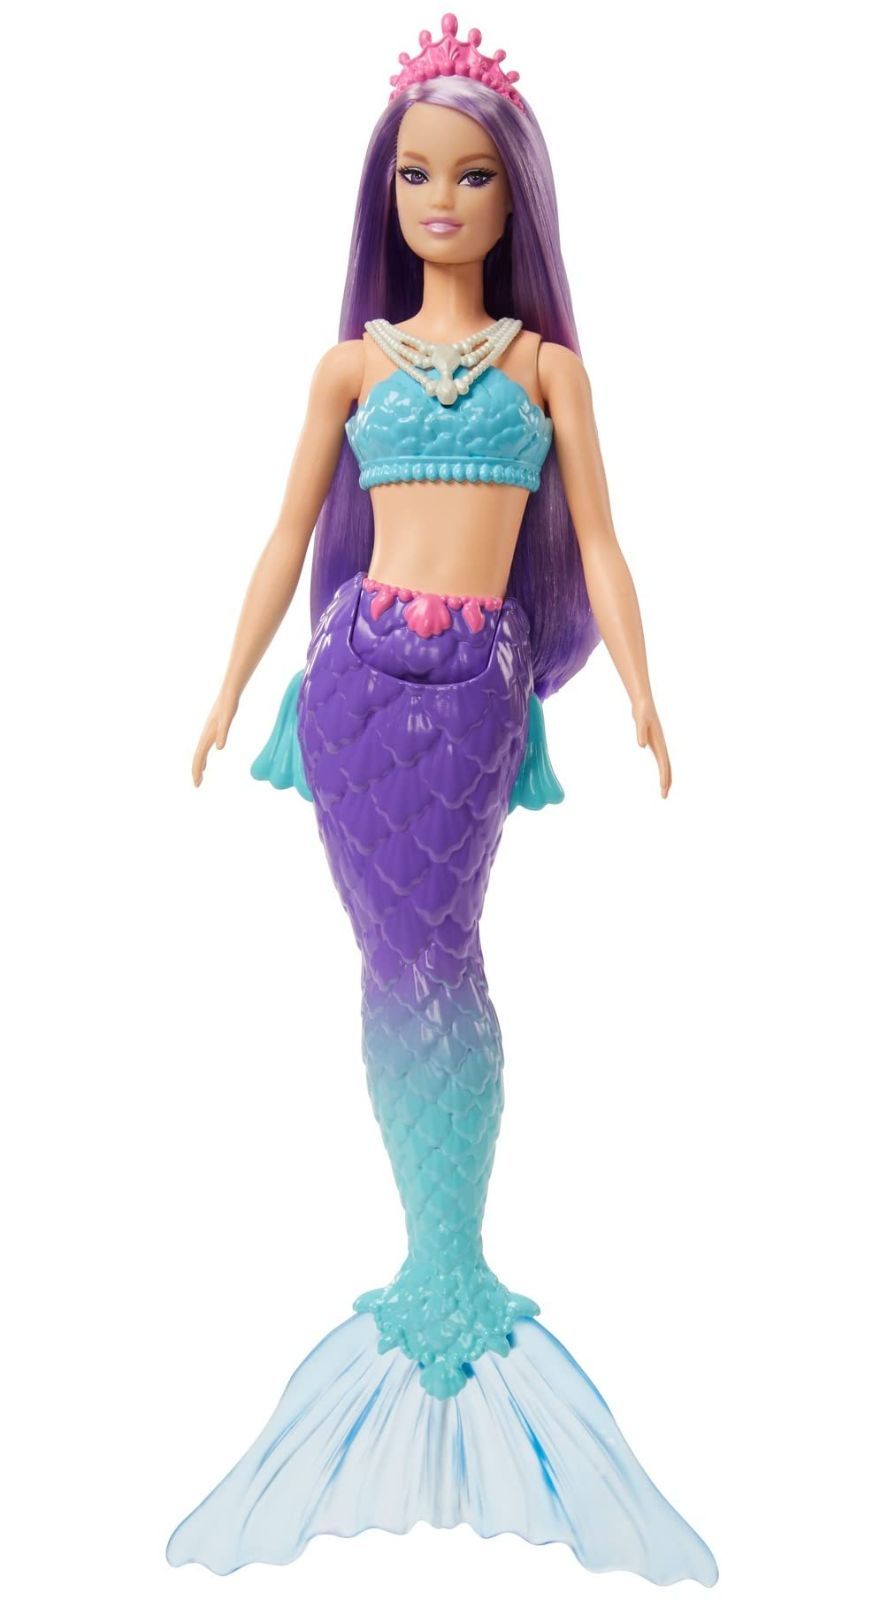 Barbie Dreamtopia Mermaid Doll (Purple Hair) with Blue & Purple